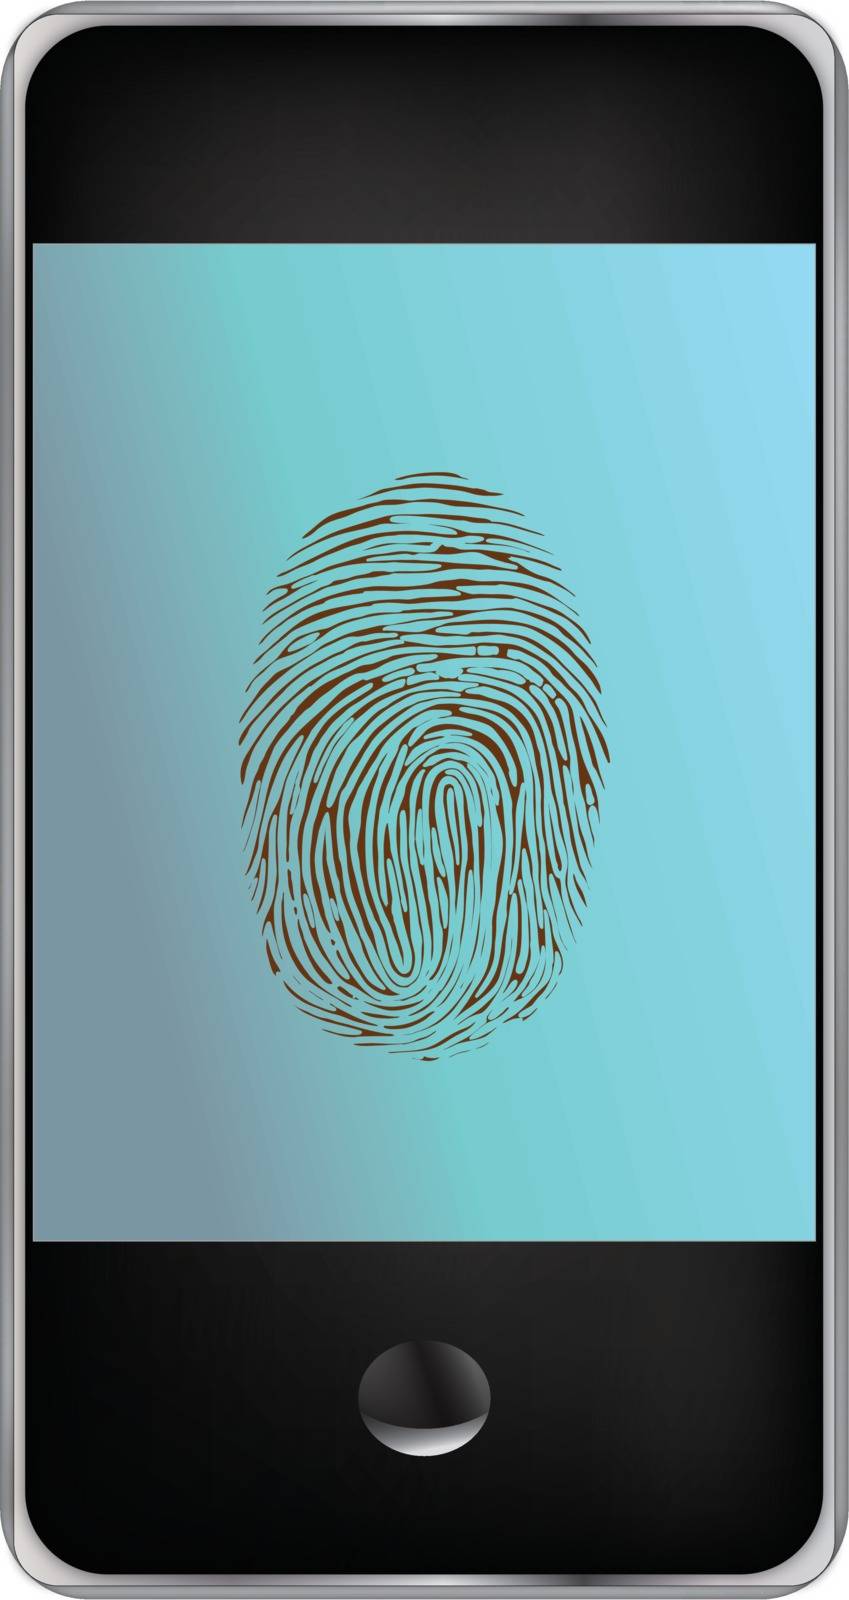 Smart Phone Fingerprint Security by Portokalis